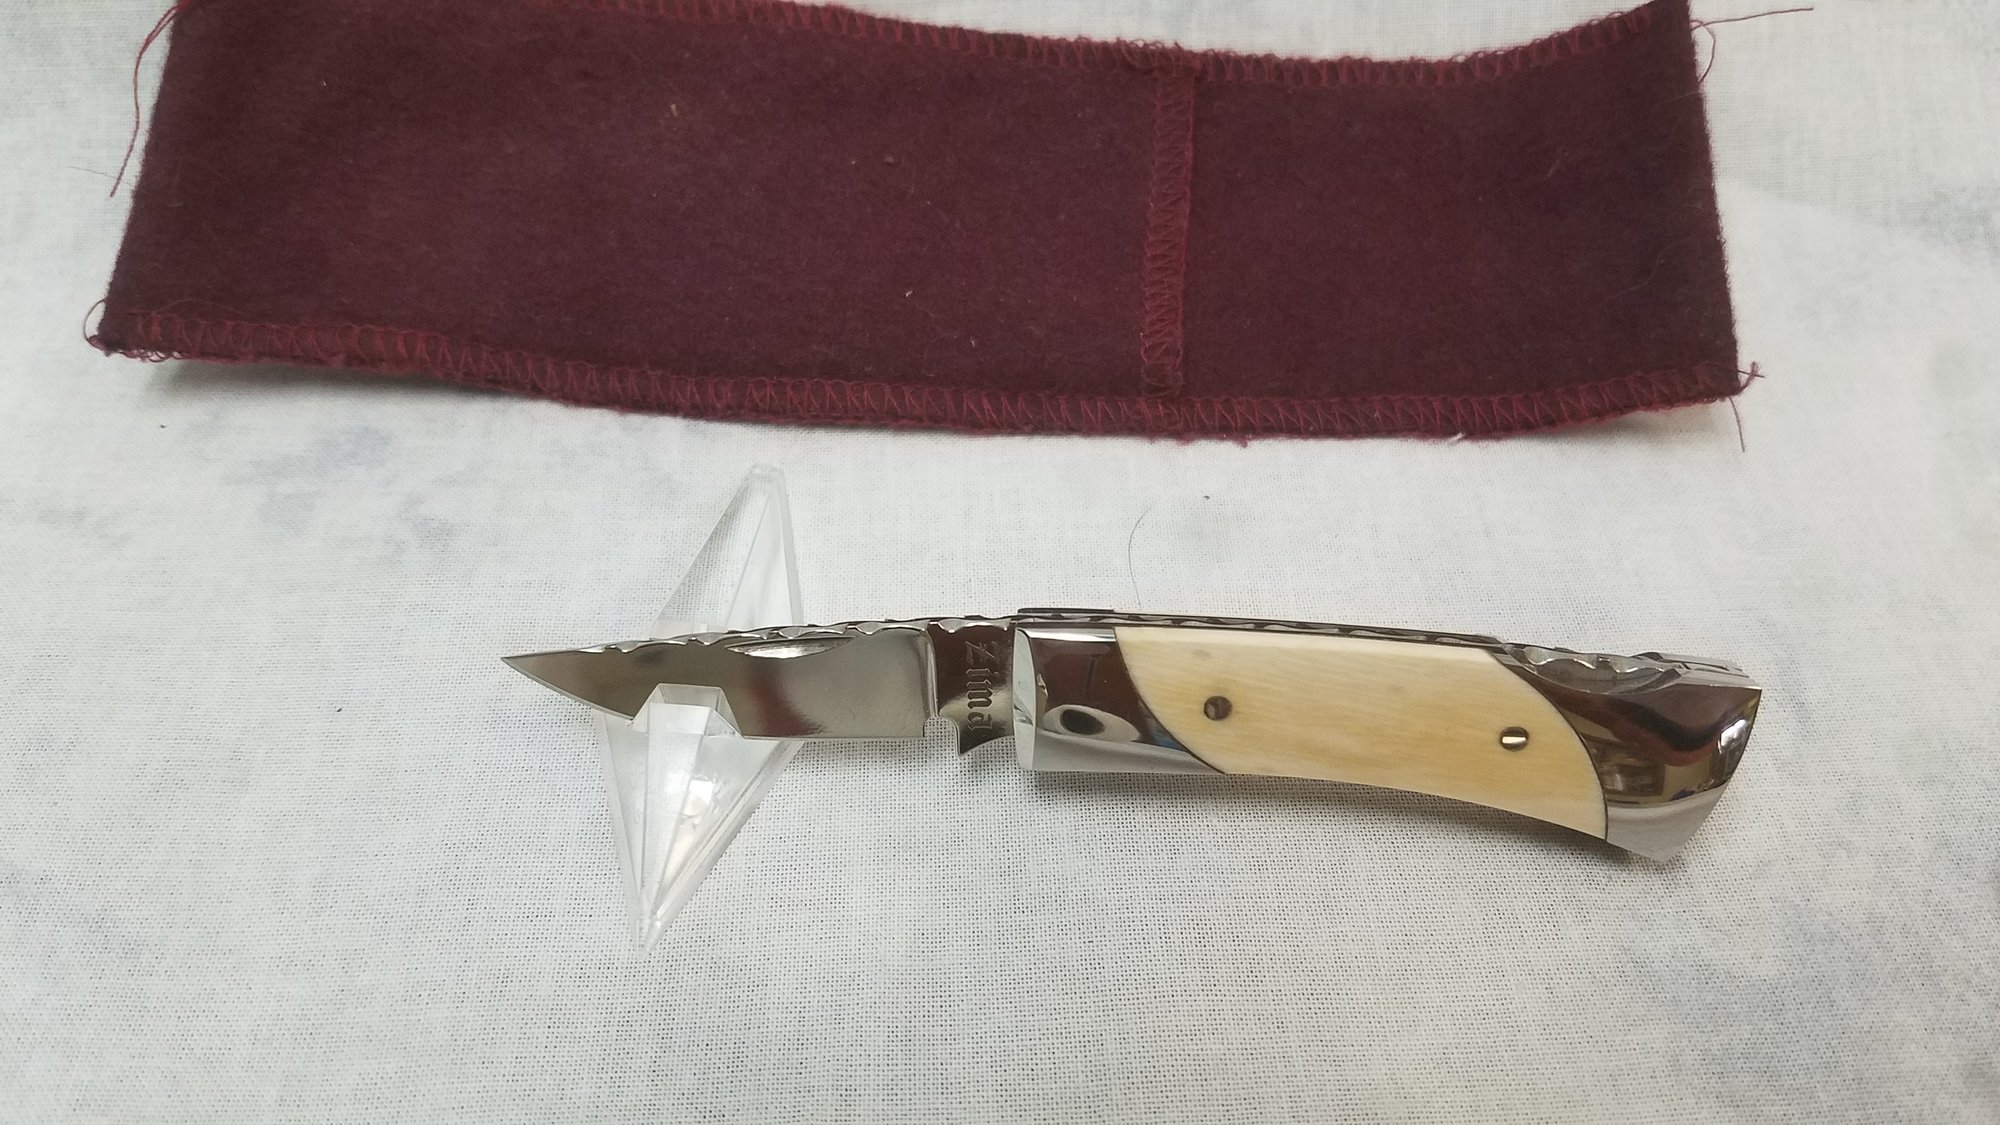 Mike Zima Custom Folding knife beautiful shape came out of a collection.